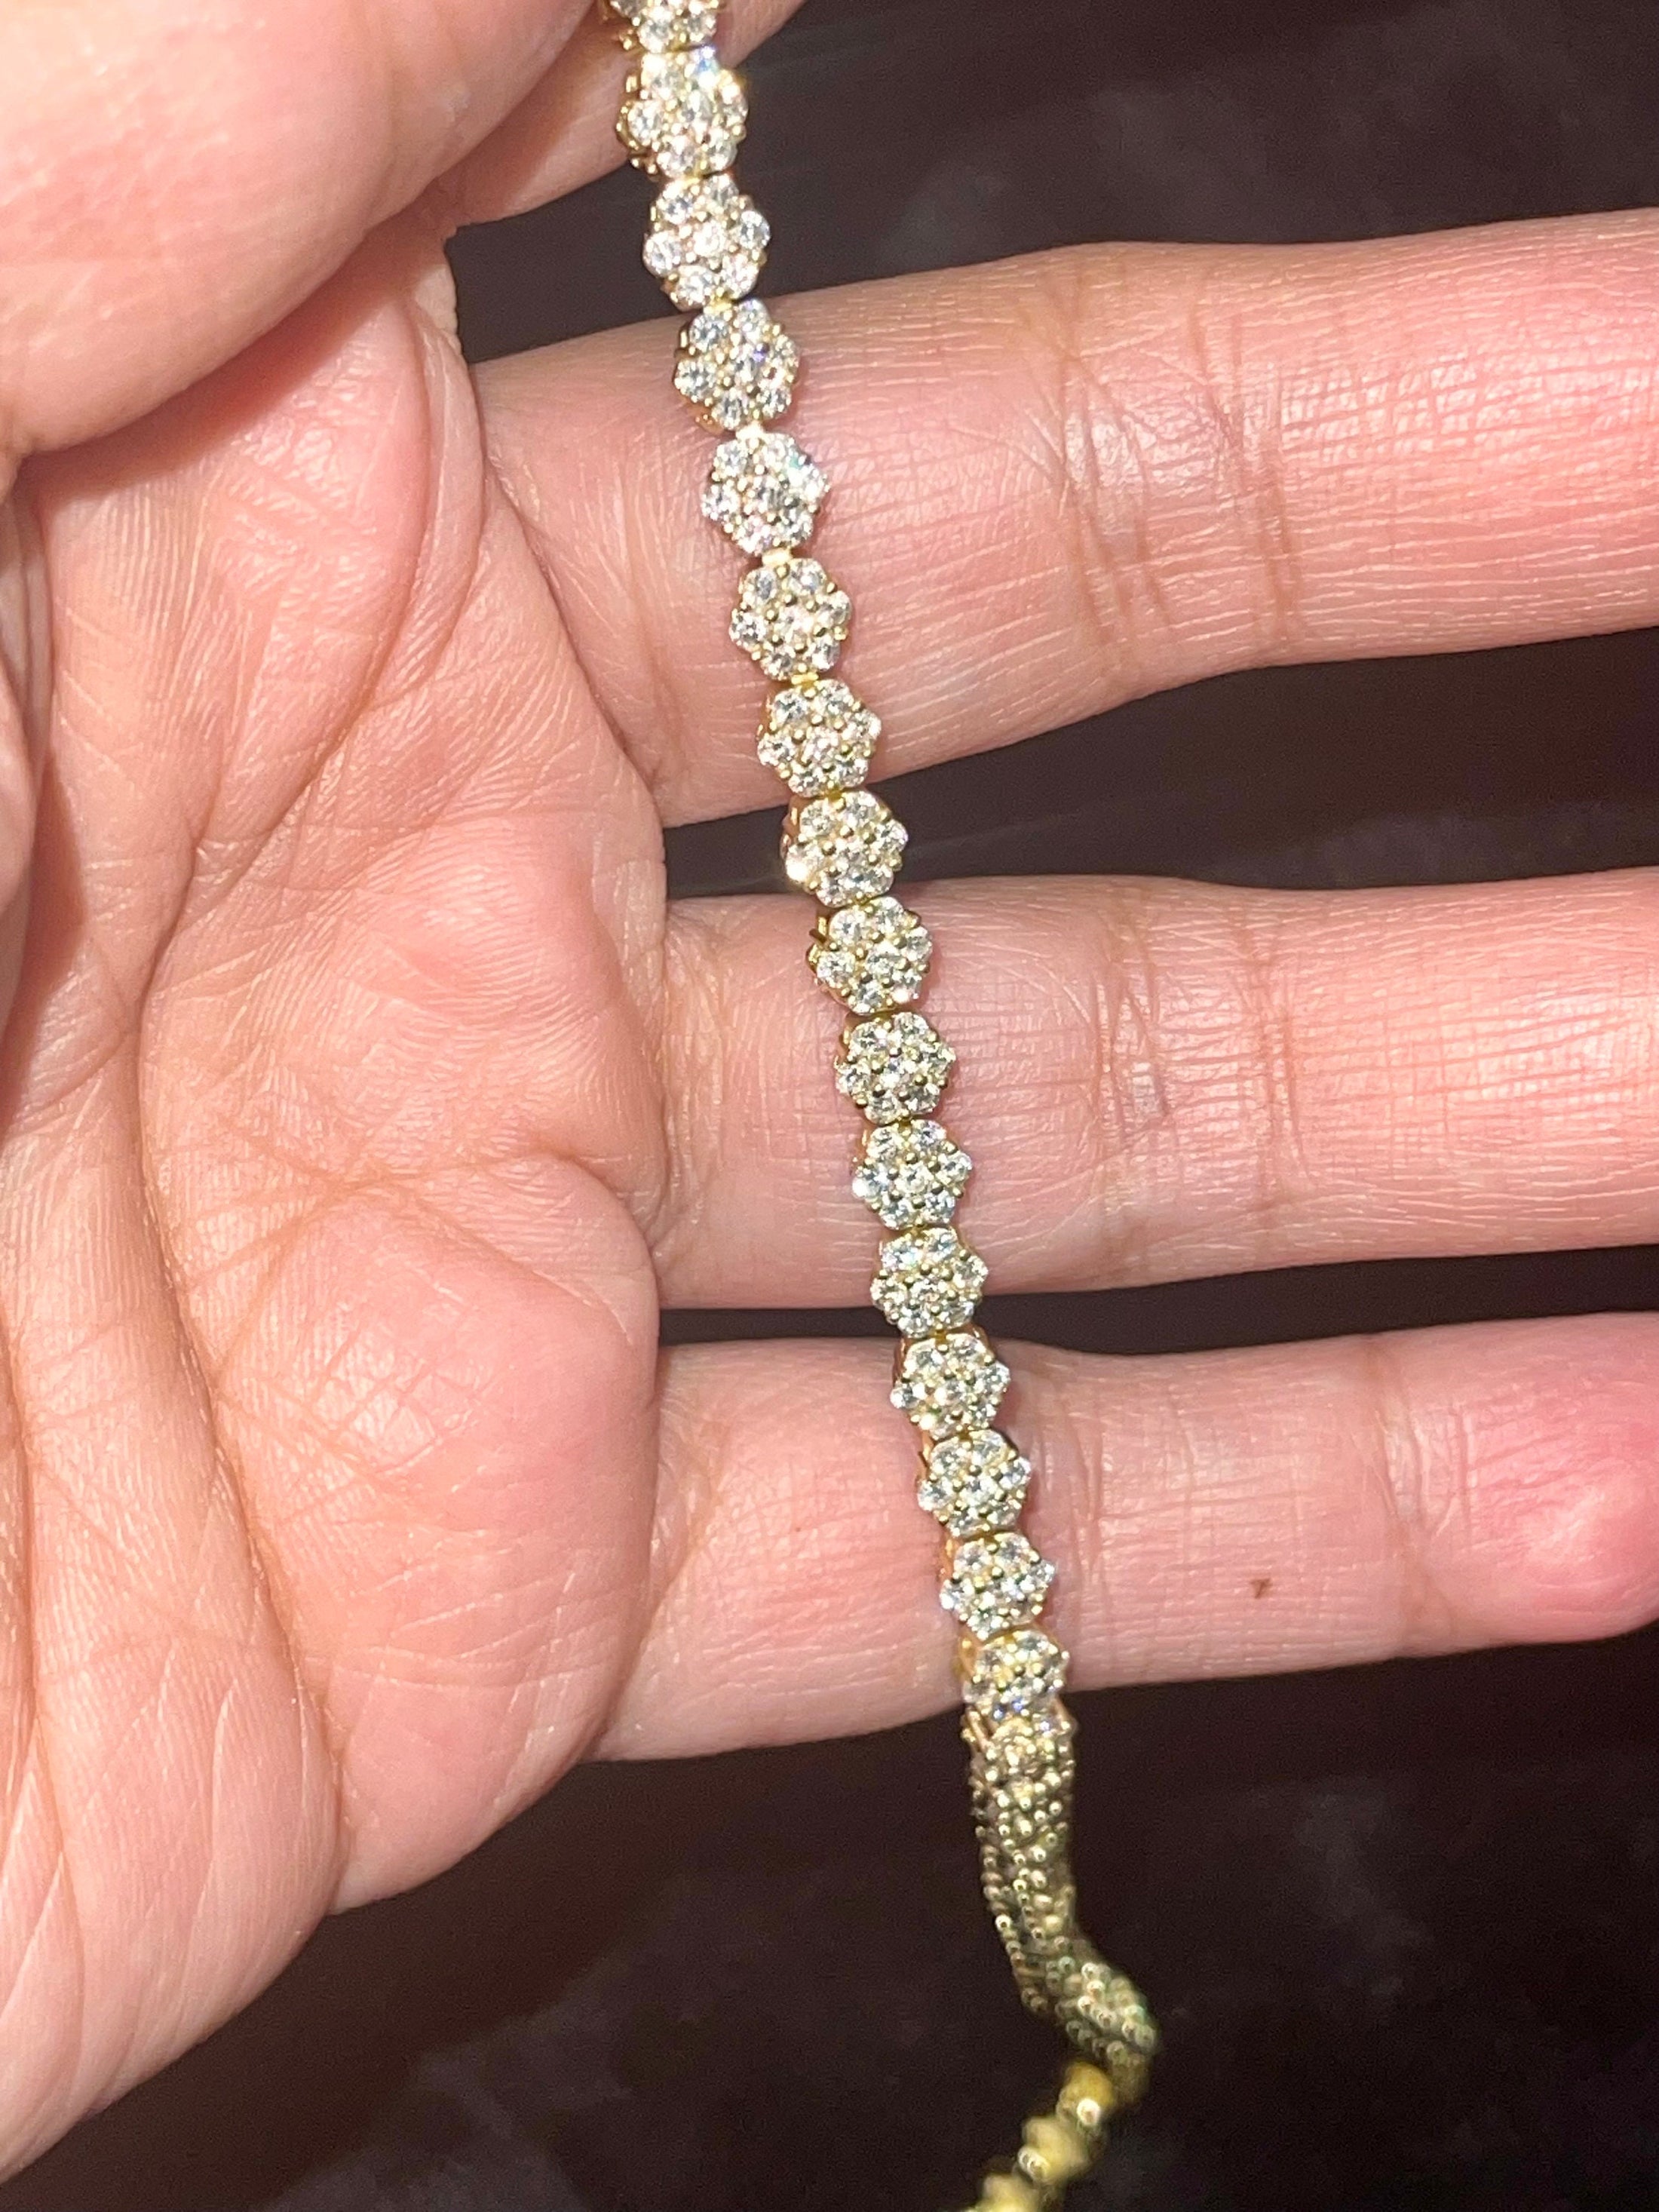 VVS clarity custom made genuine crystal gold vermeil 925 stamped stunning flower bracelet for men or women, Gifts for Him/her, Anniversary